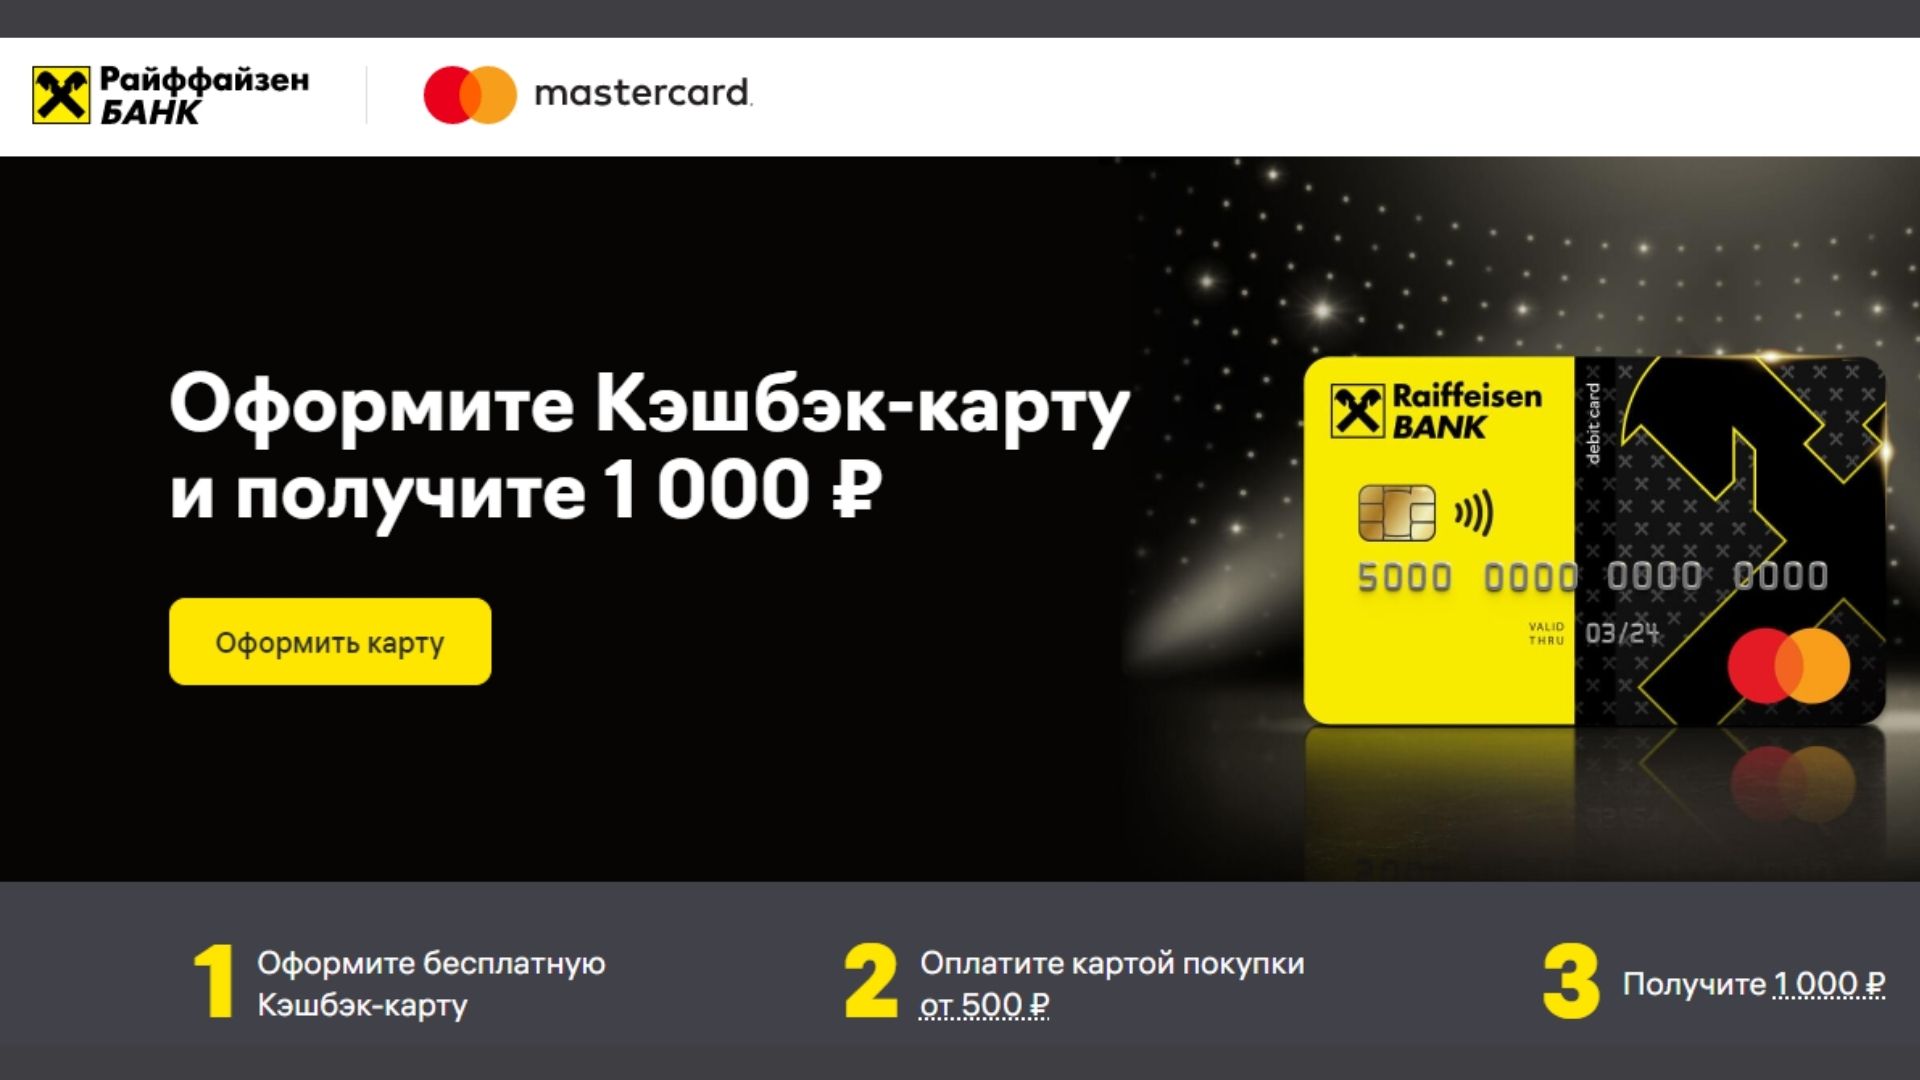 raiffaizenbank privedi druga za 1000 rubley misterbankir 6